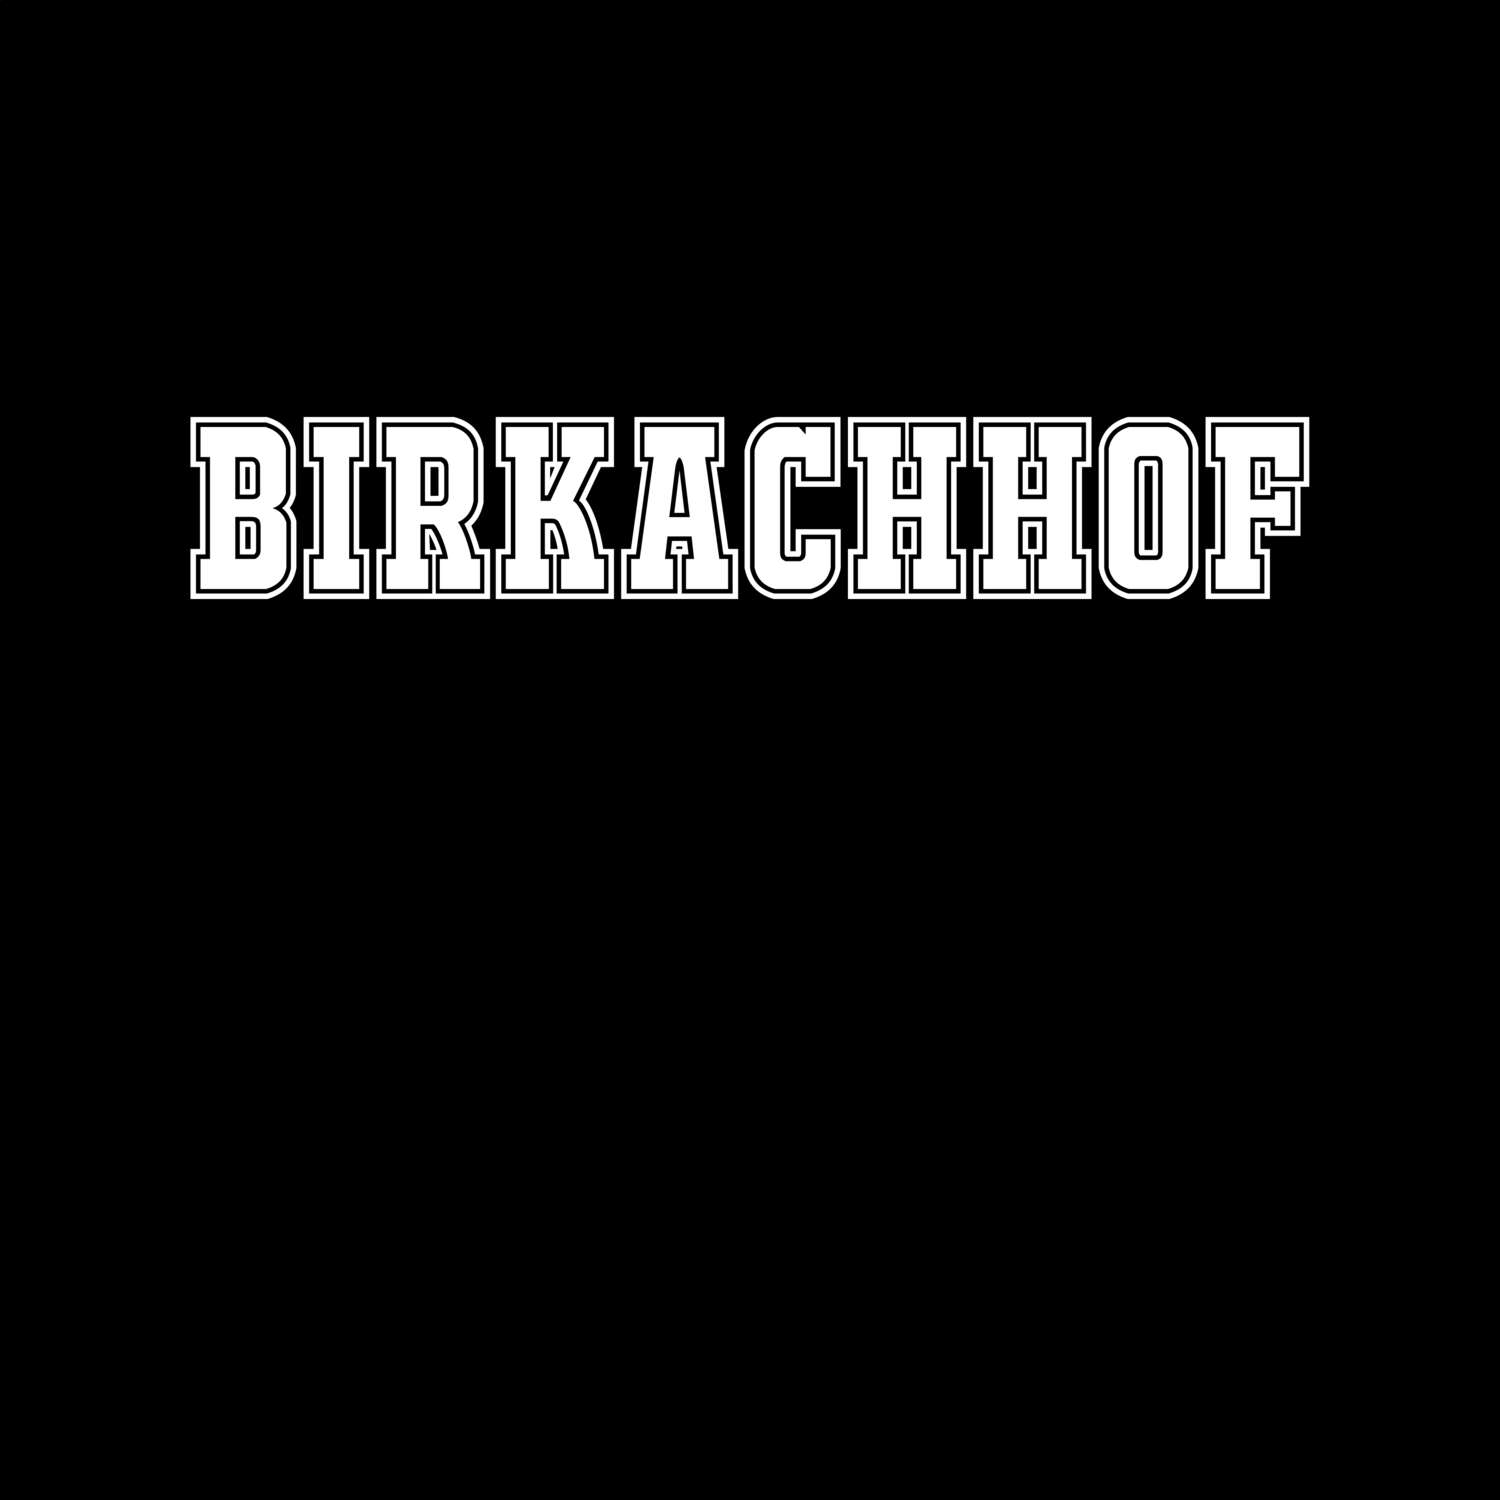 Birkachhof T-Shirt »Classic«